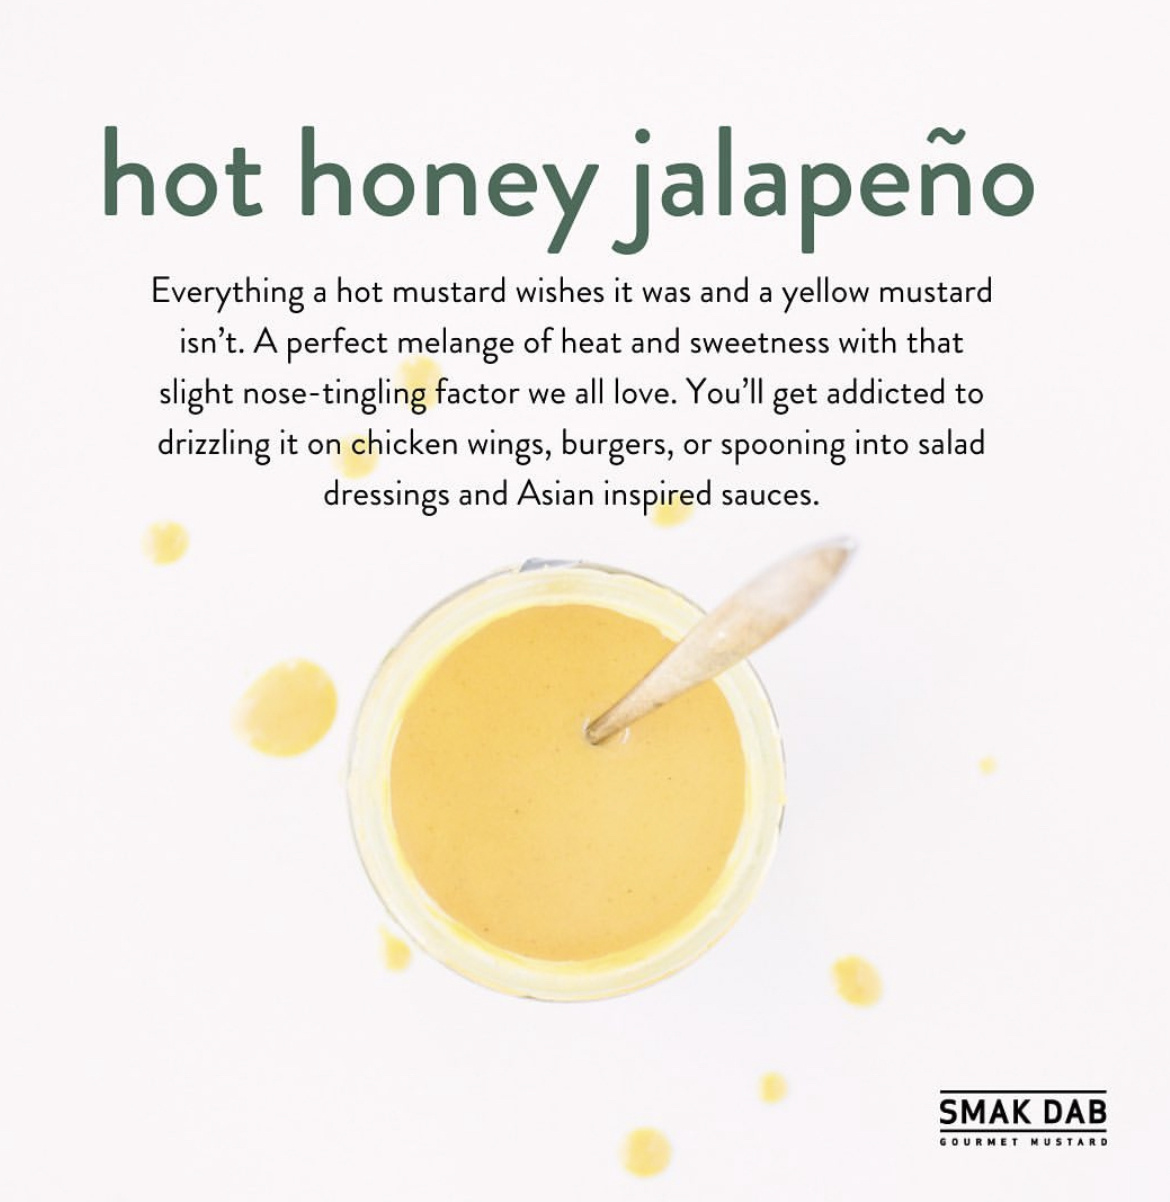 Smak Dab Smak Dab Mustard: Hot Honey Jalapeno